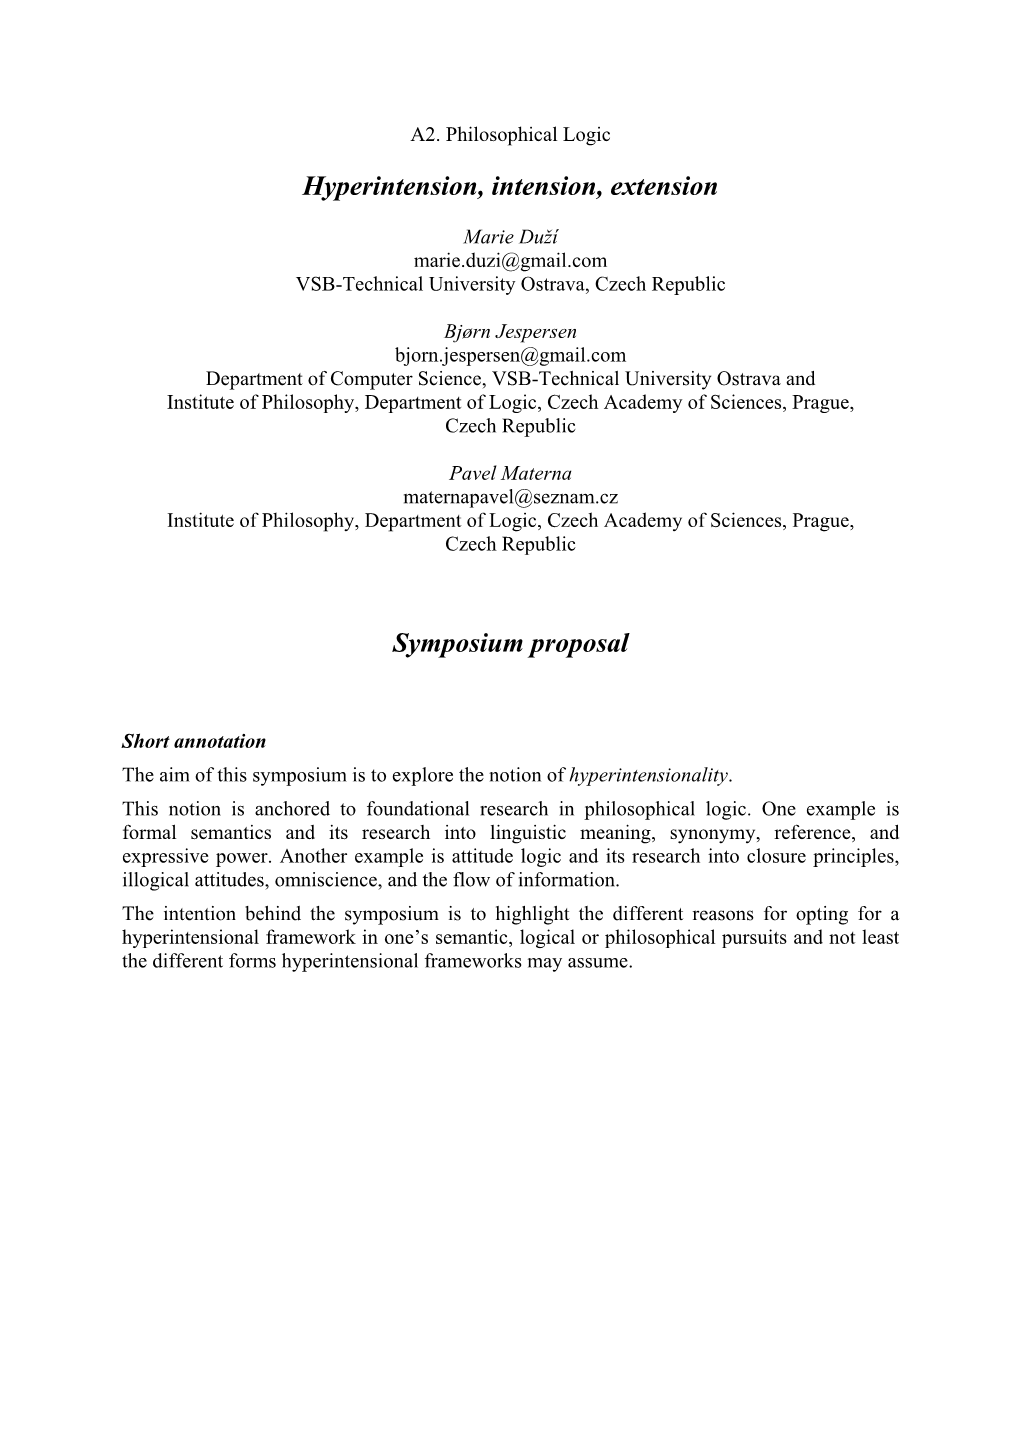 Hyperintension, Intension, Extension Symposium Proposal